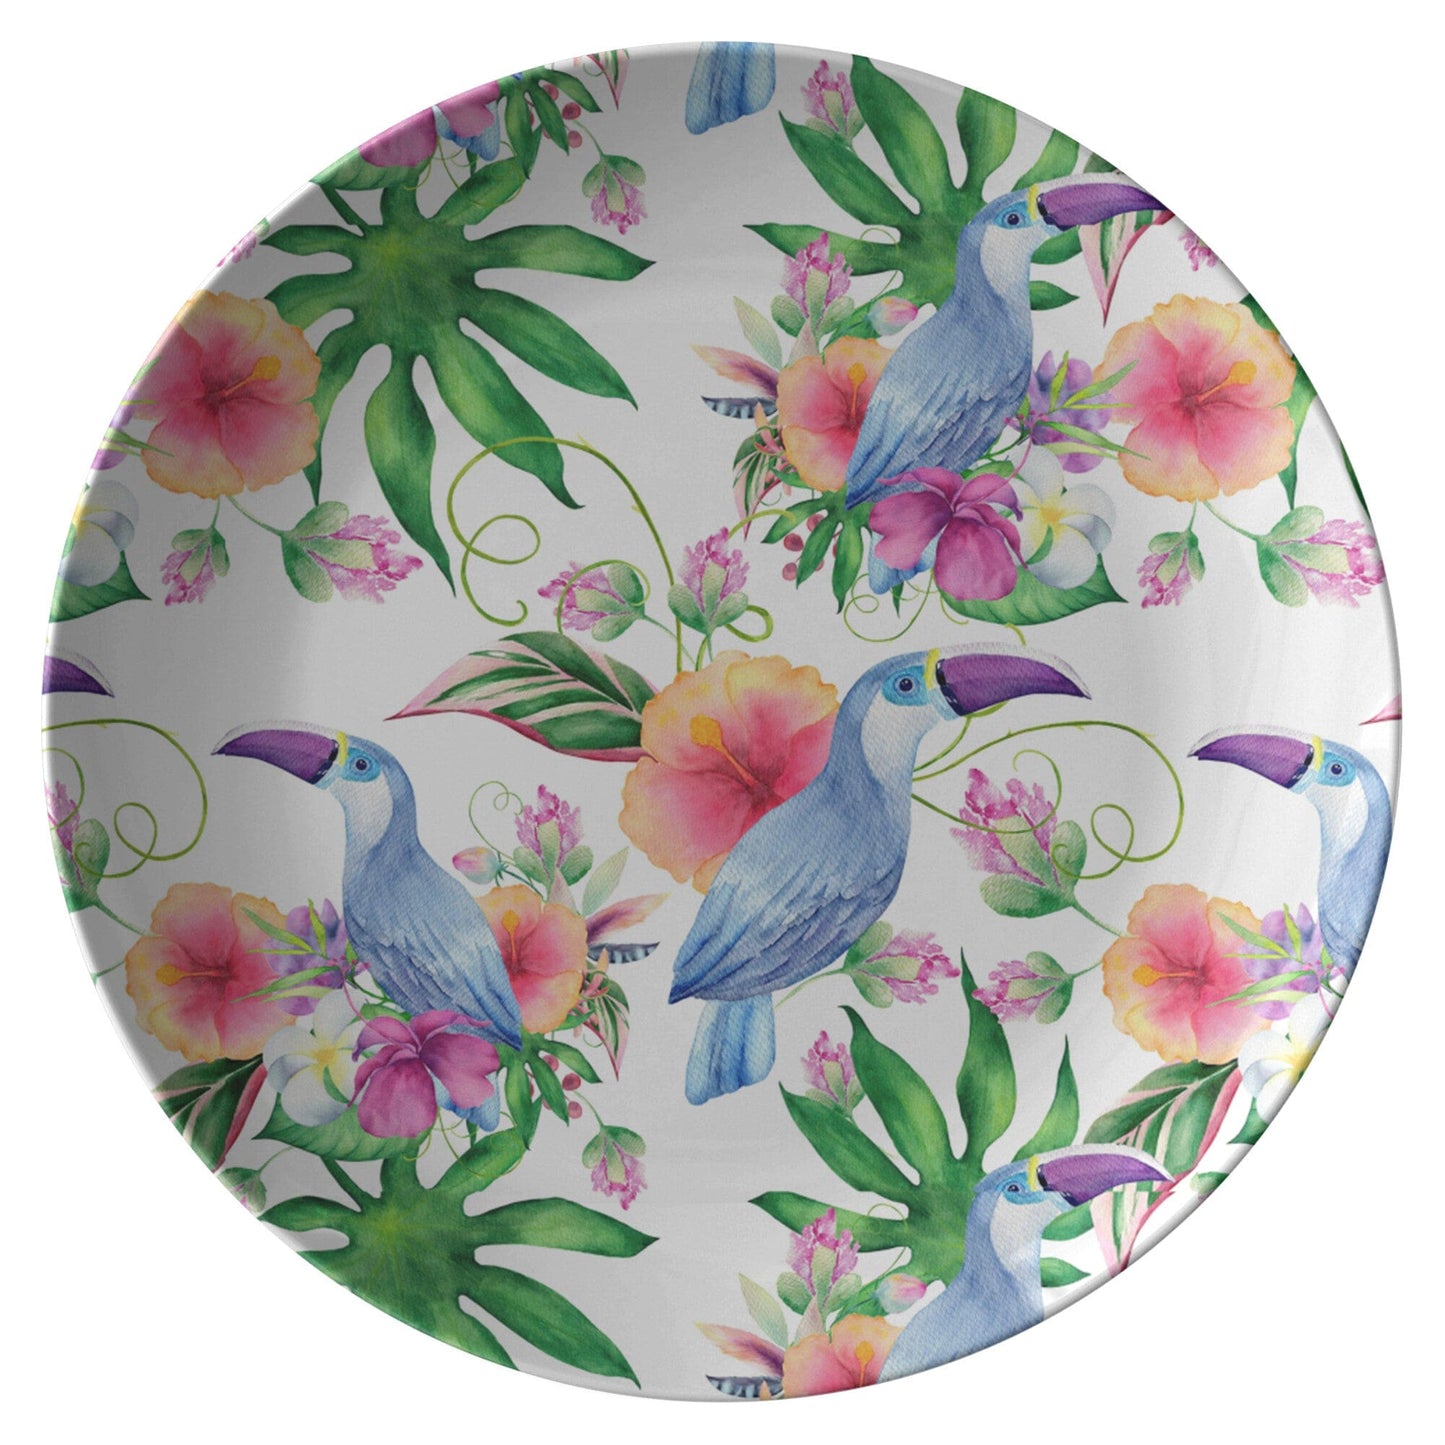 Kate McEnroe New York Dinner Plate in Watercolor Toucan Floral Art Plates